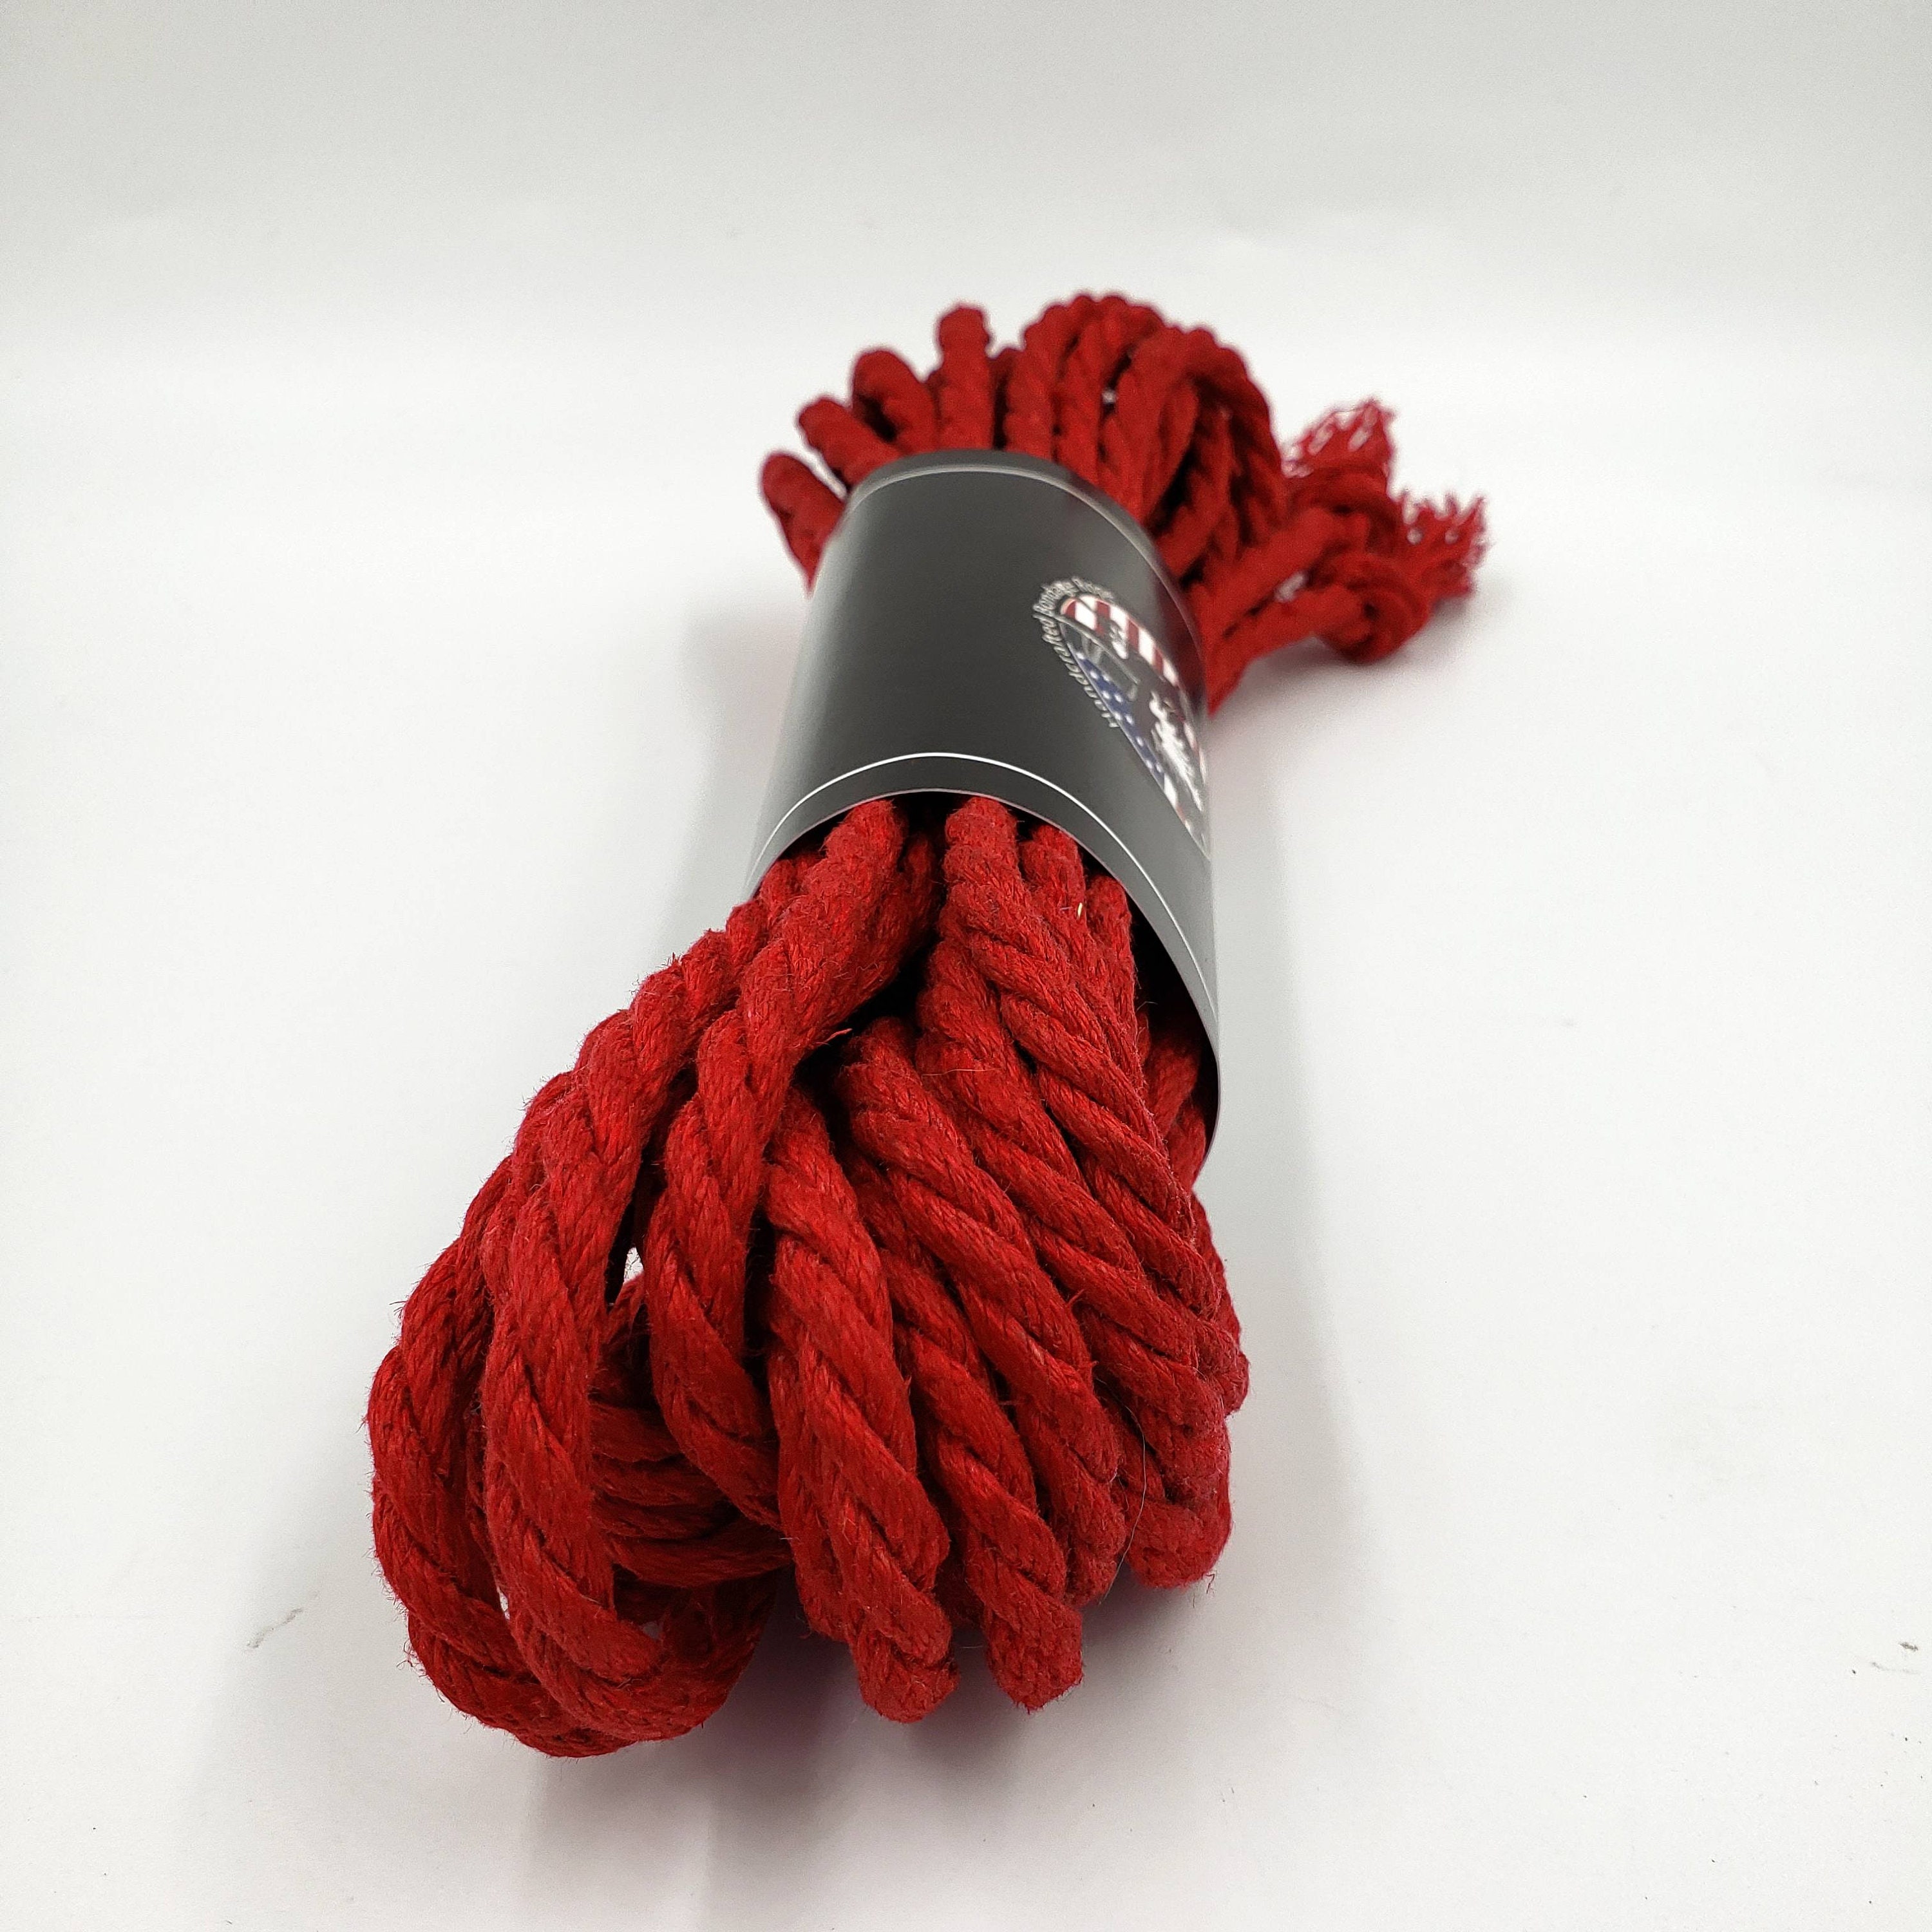 Hemp Bondage Rope Rose Red Shibari 6mm Mature